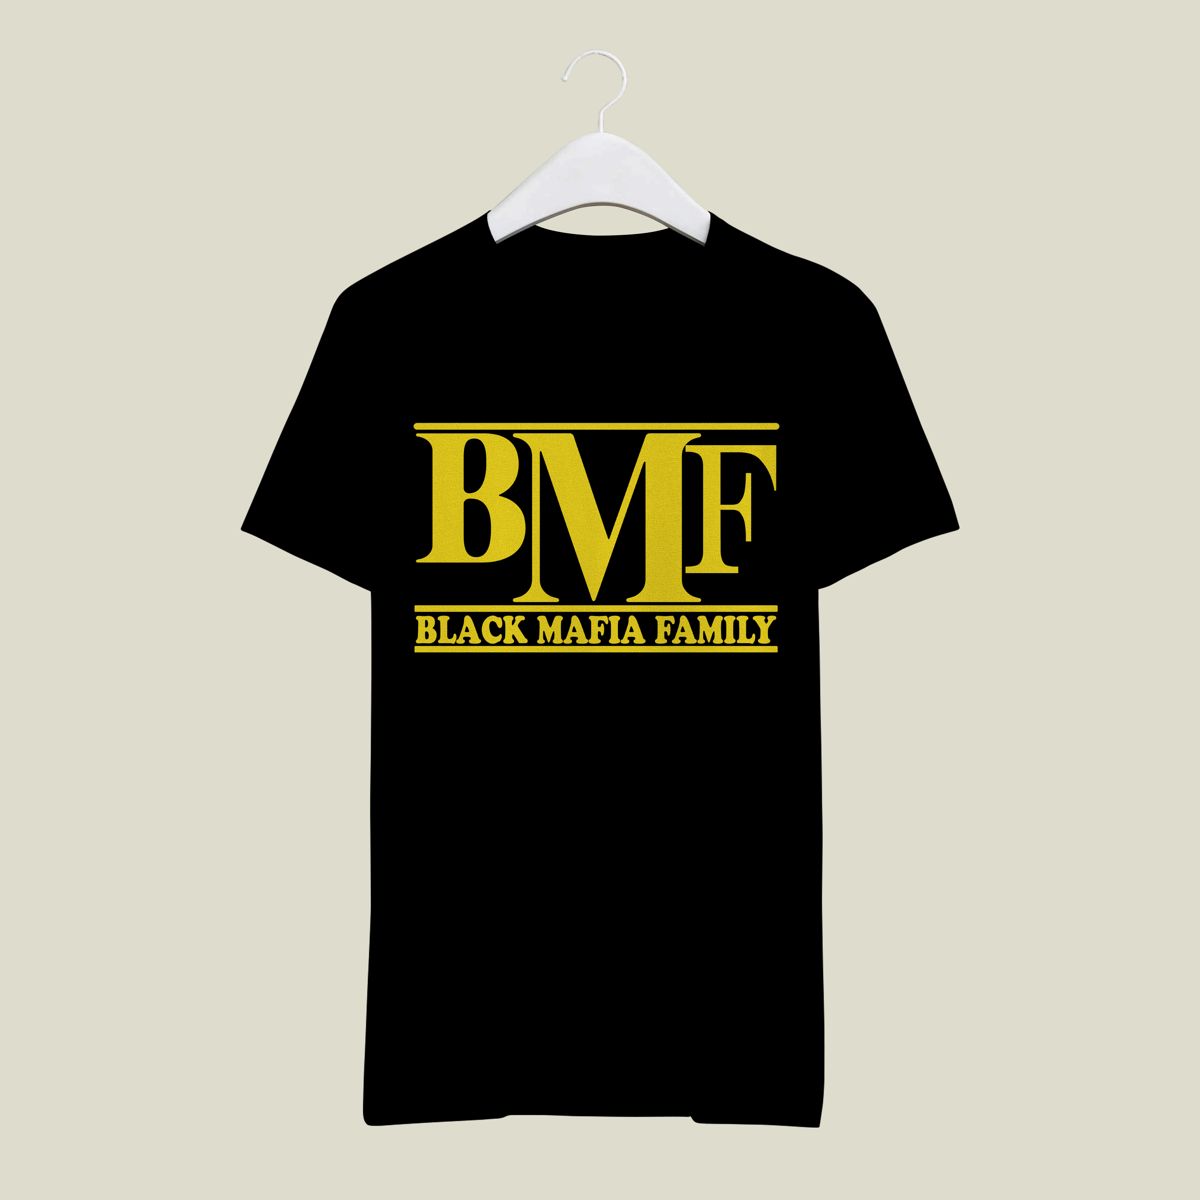 Bmf Black Mafia Family T-shirt